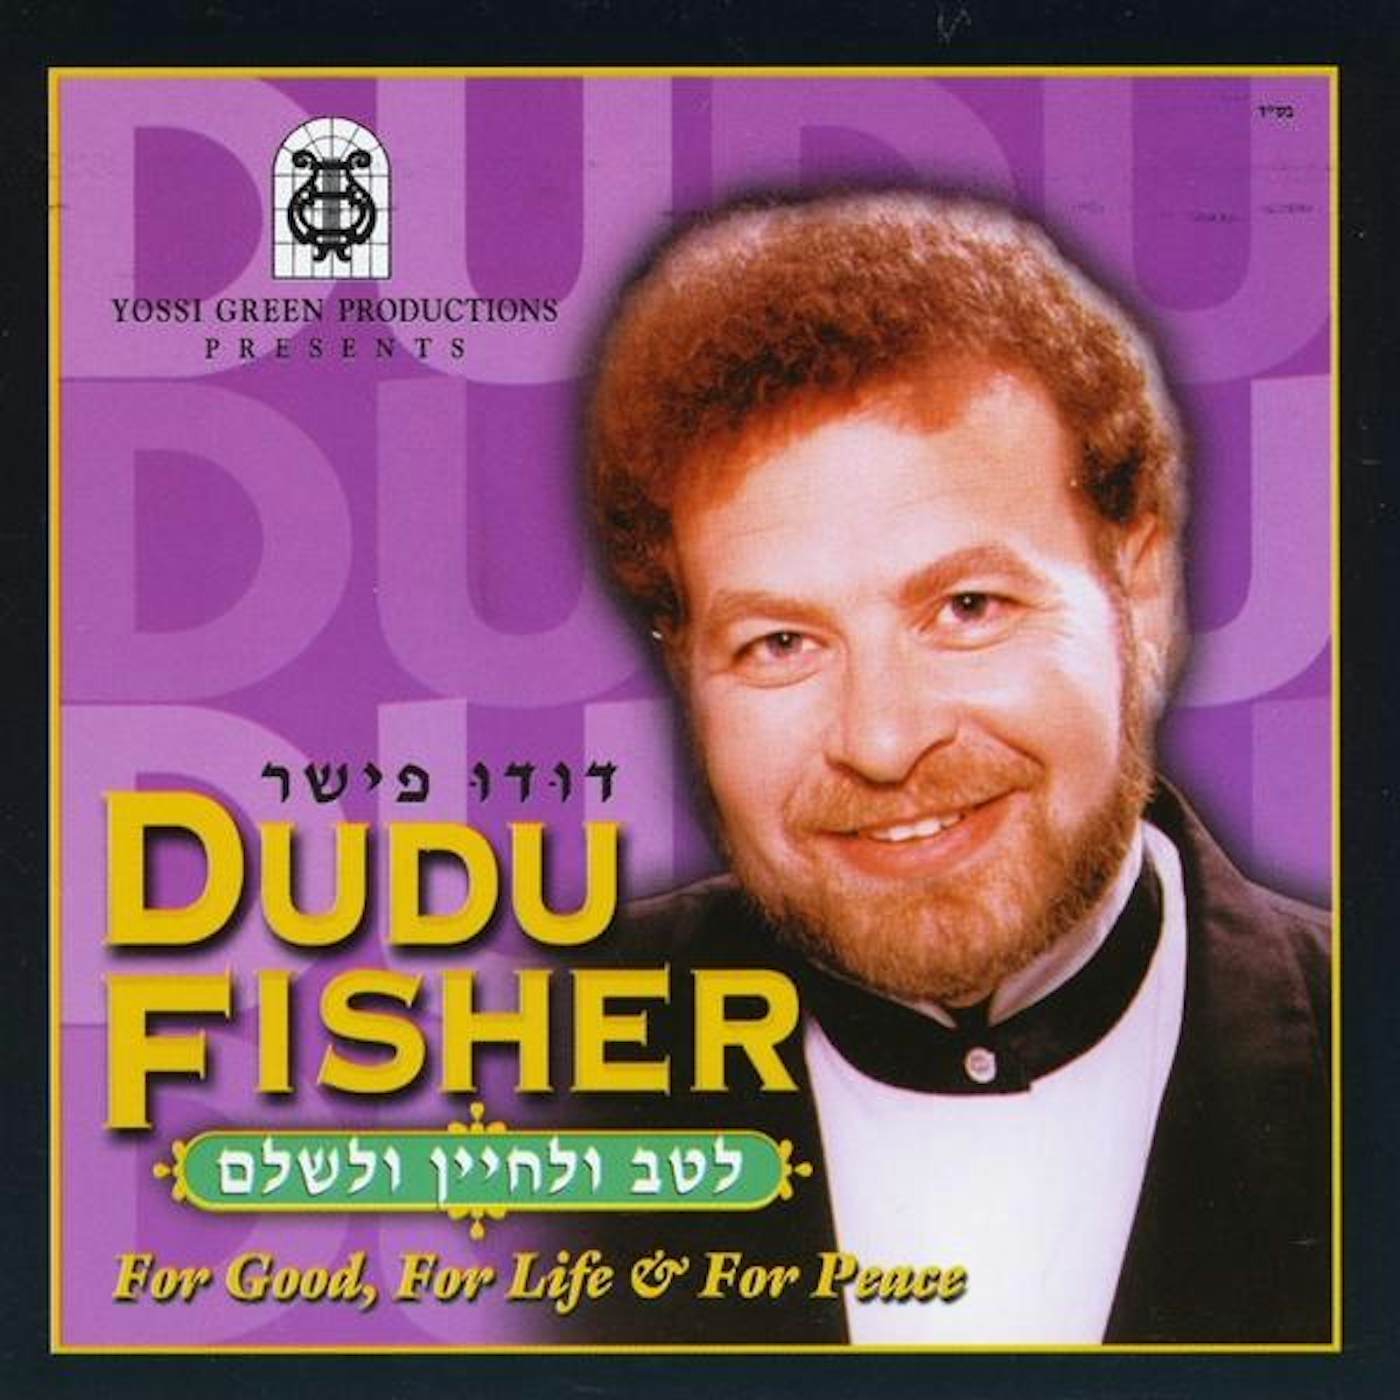 Dudu Fisher L'TAV U'LCHAYIN V'LISHLOM-FOR GOOD FOR LIFE & FOR CD